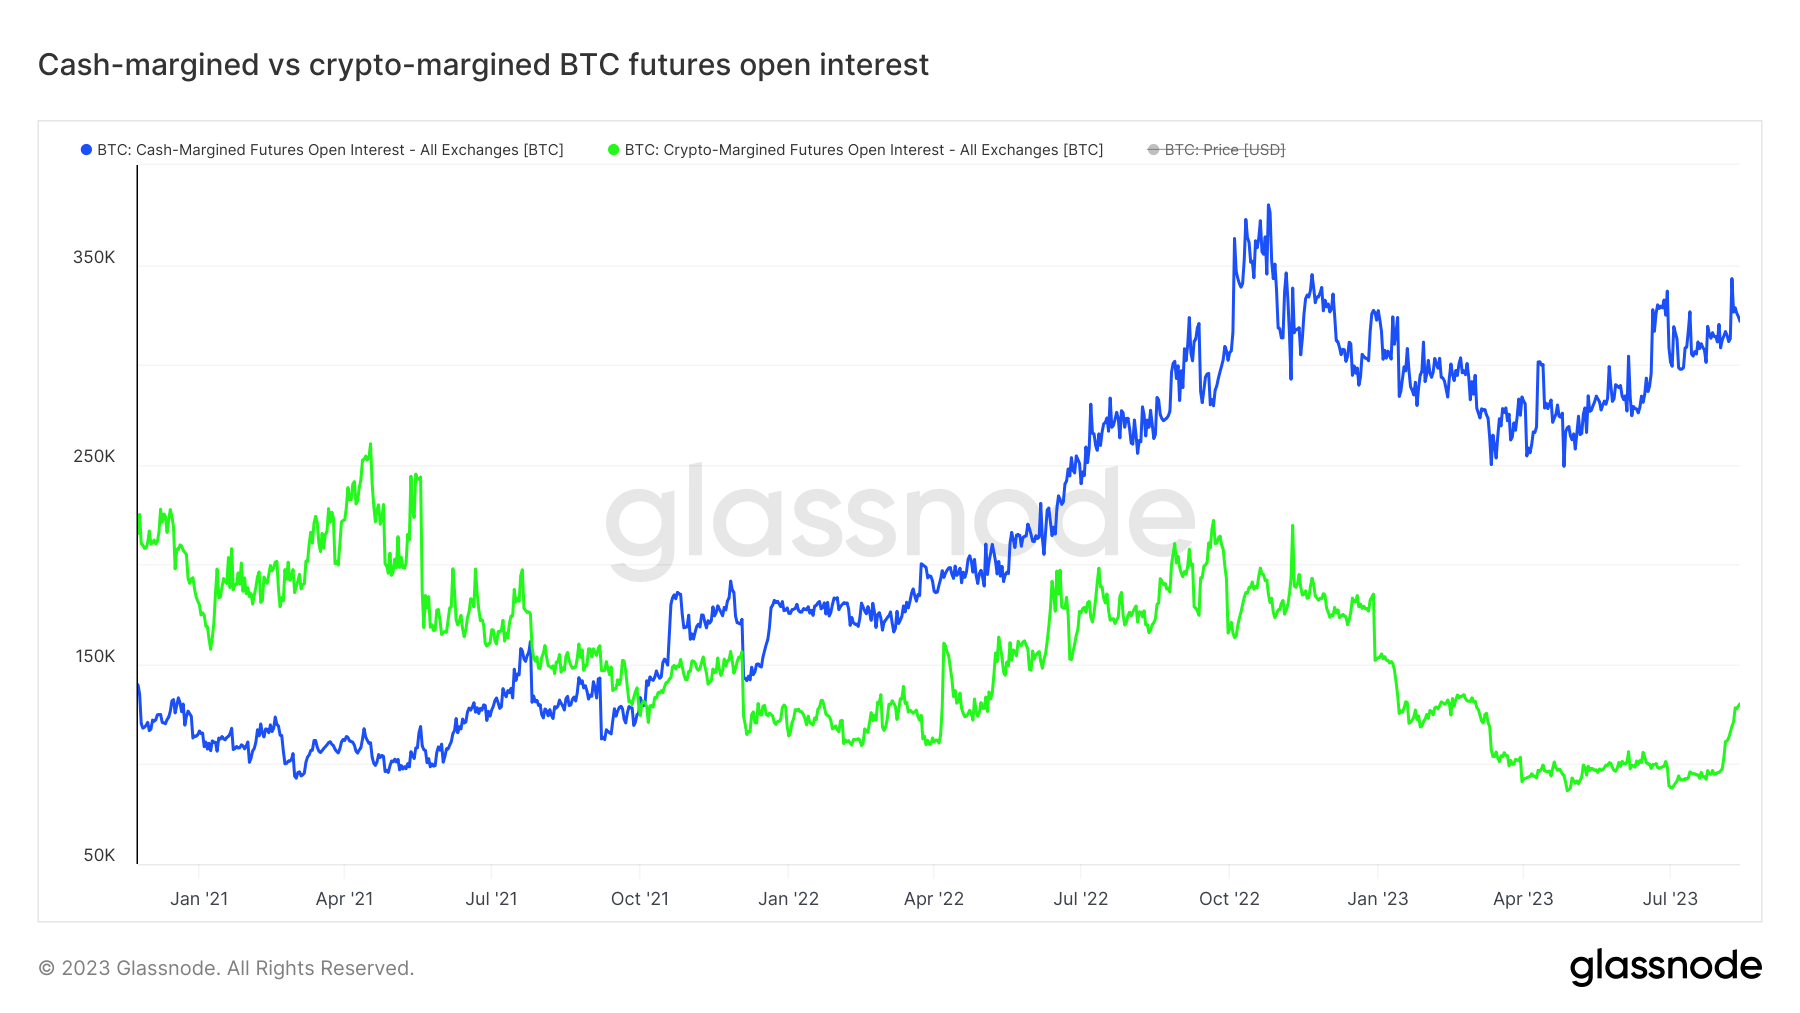 crypto-margined vs cash-margined futures open interest all